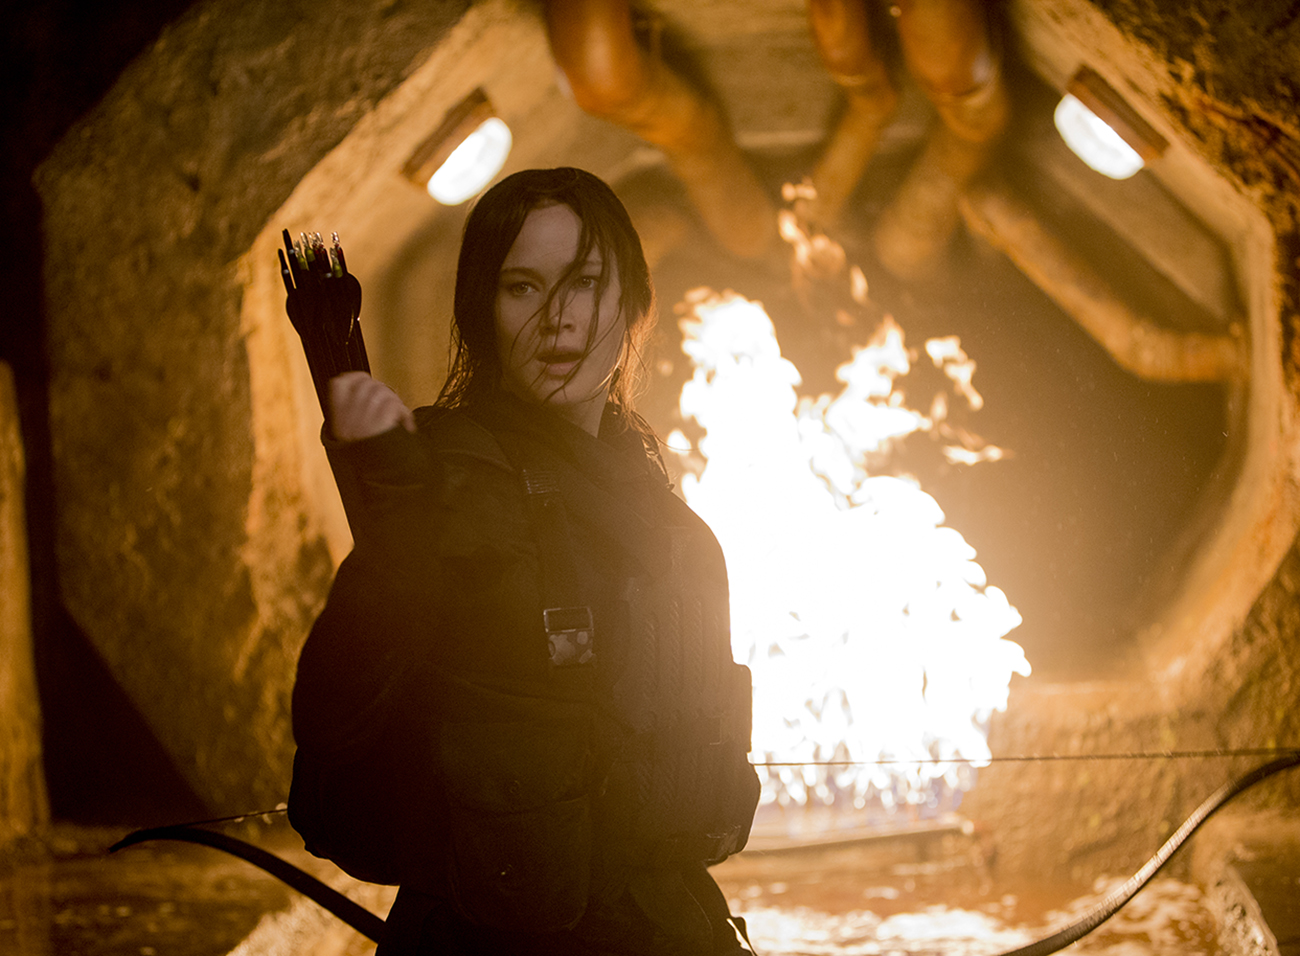 The Hunger Games: Οι ταινίες «Αγώνες Πείνας» διαθέσιμες στο ERTFLIX